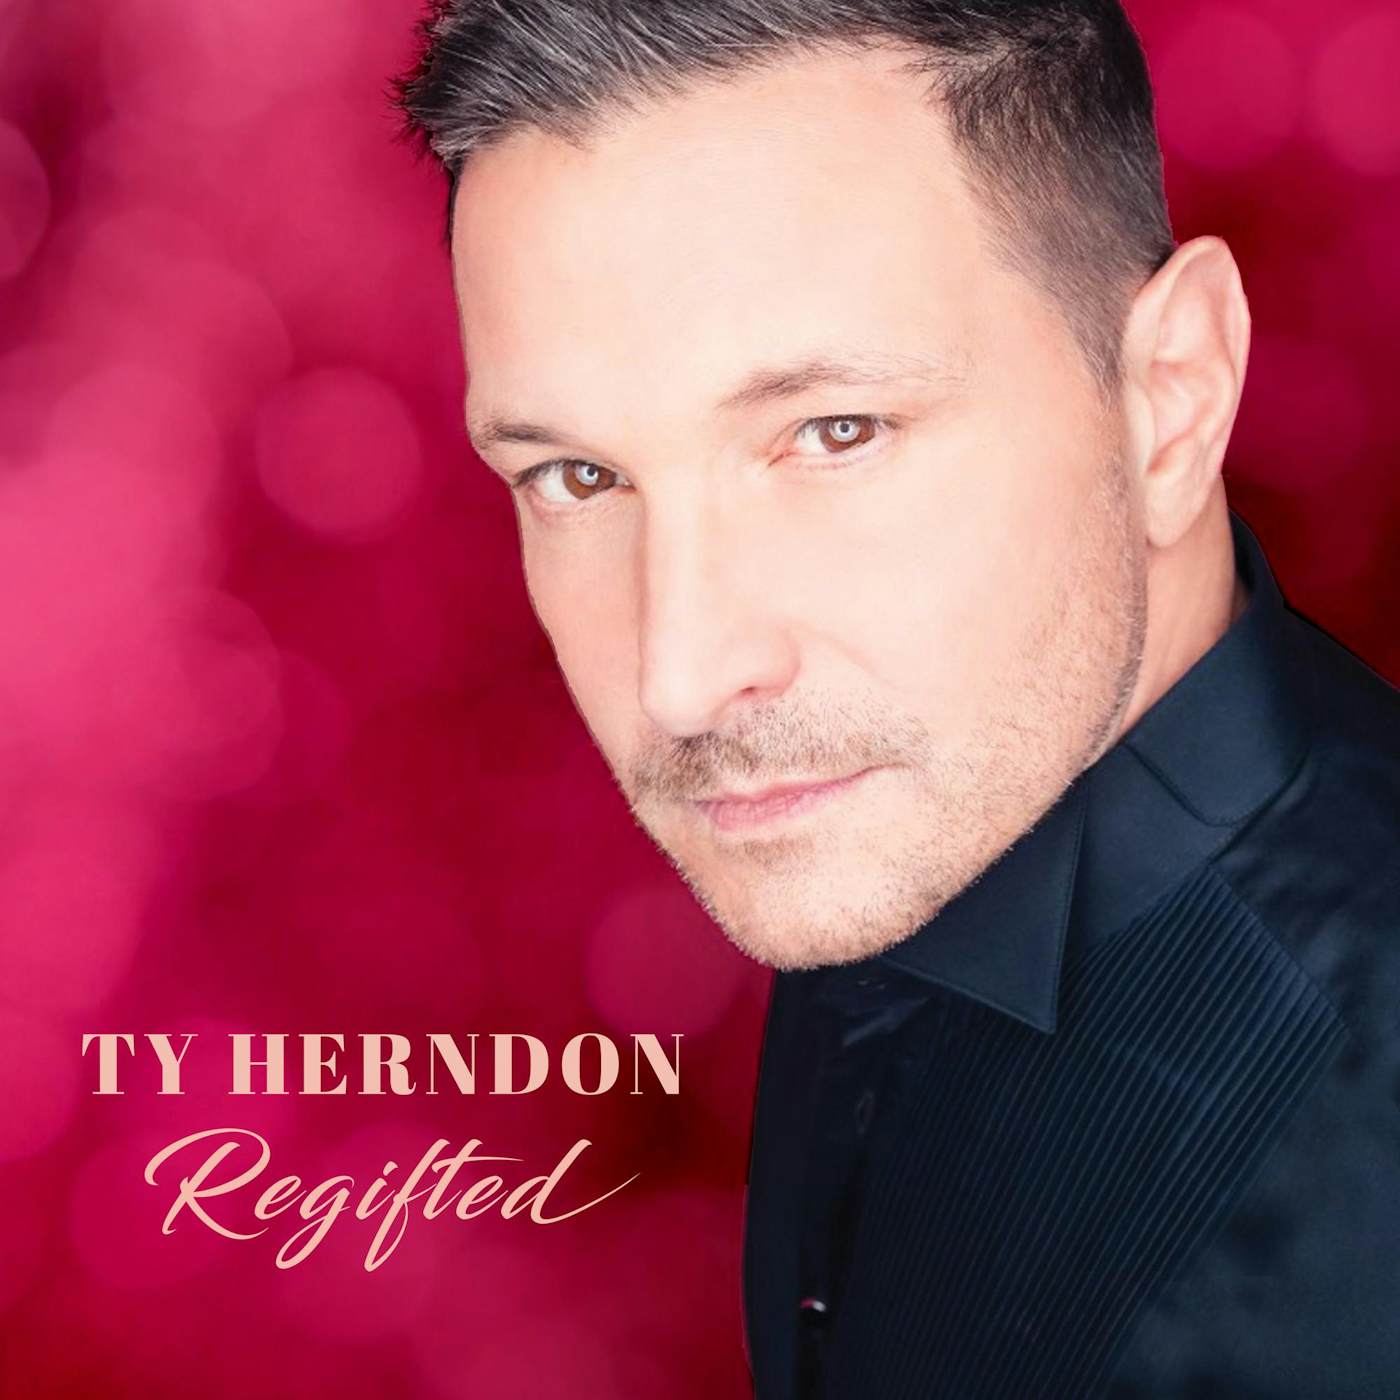 Ty Herndon REGIFTED CD